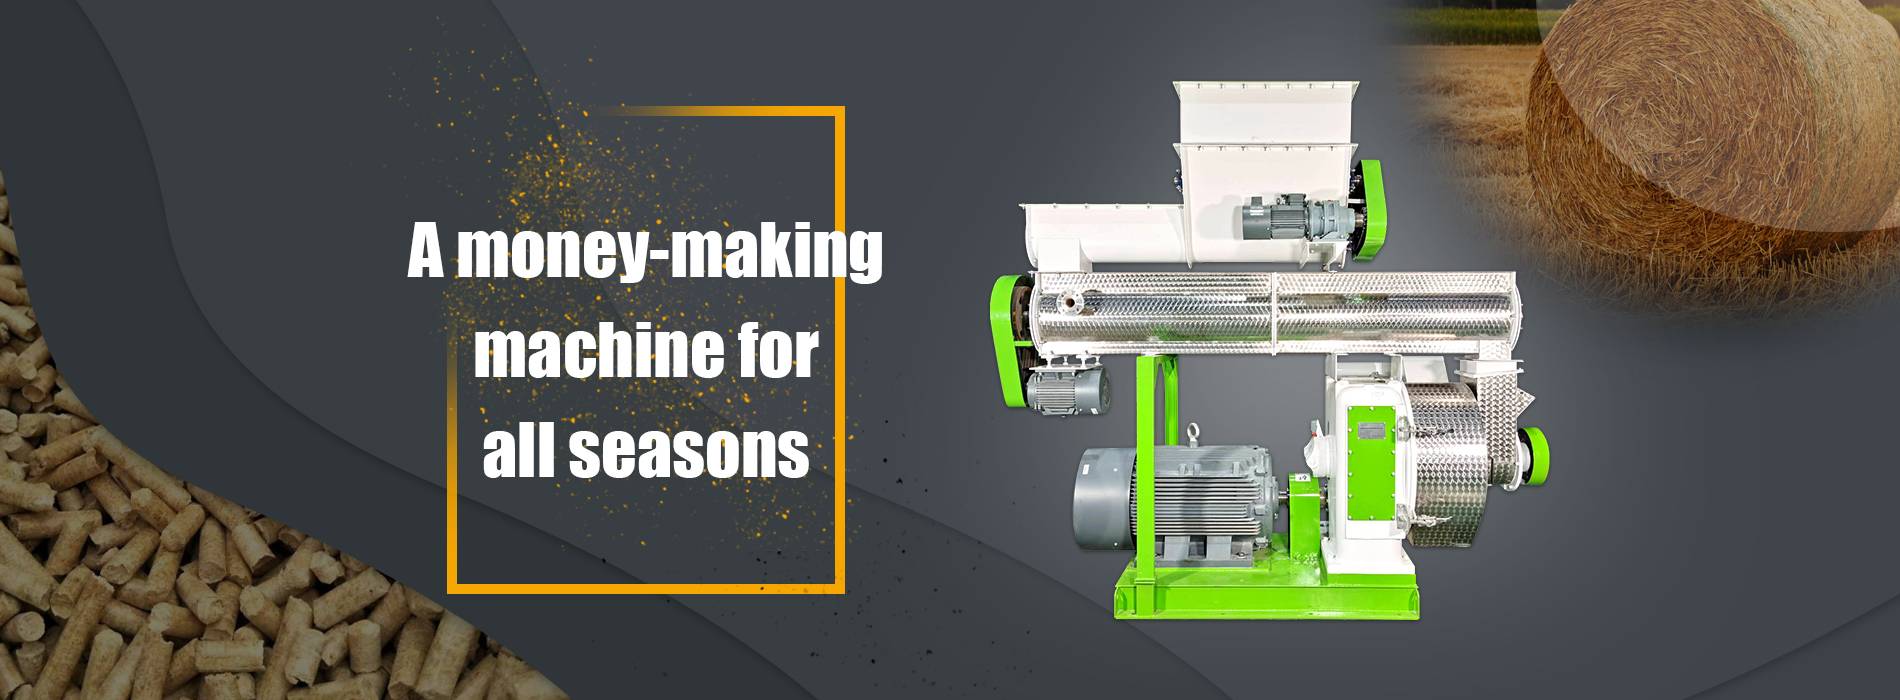 money-making machine for all seasons